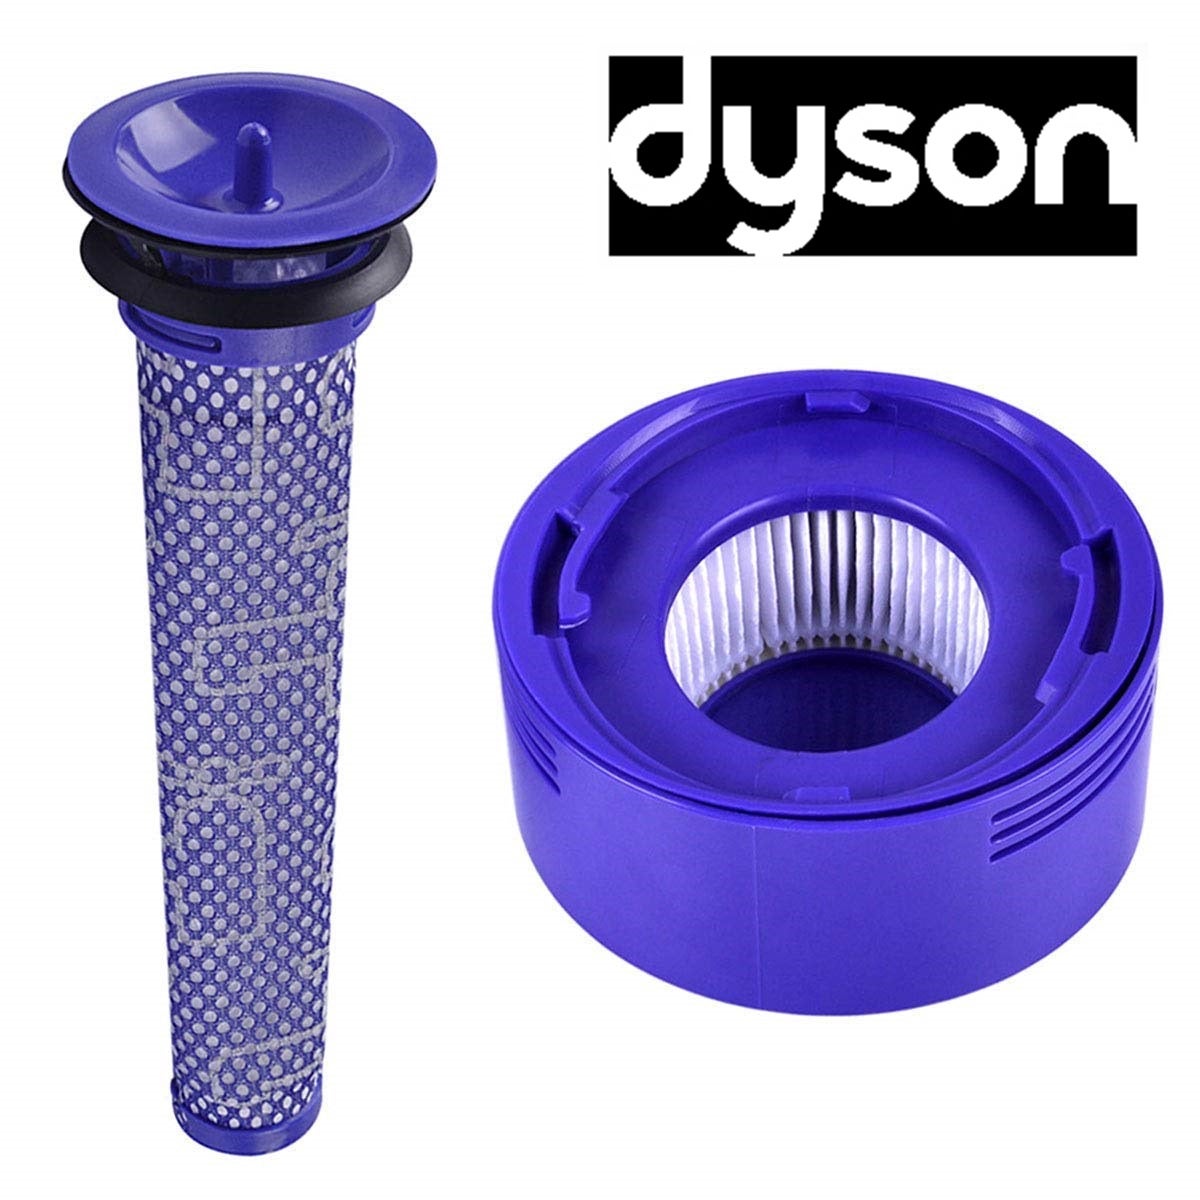 Pre Post Motor Filter set For Dyson V7 V8 Animal Cordless Handheld Vac